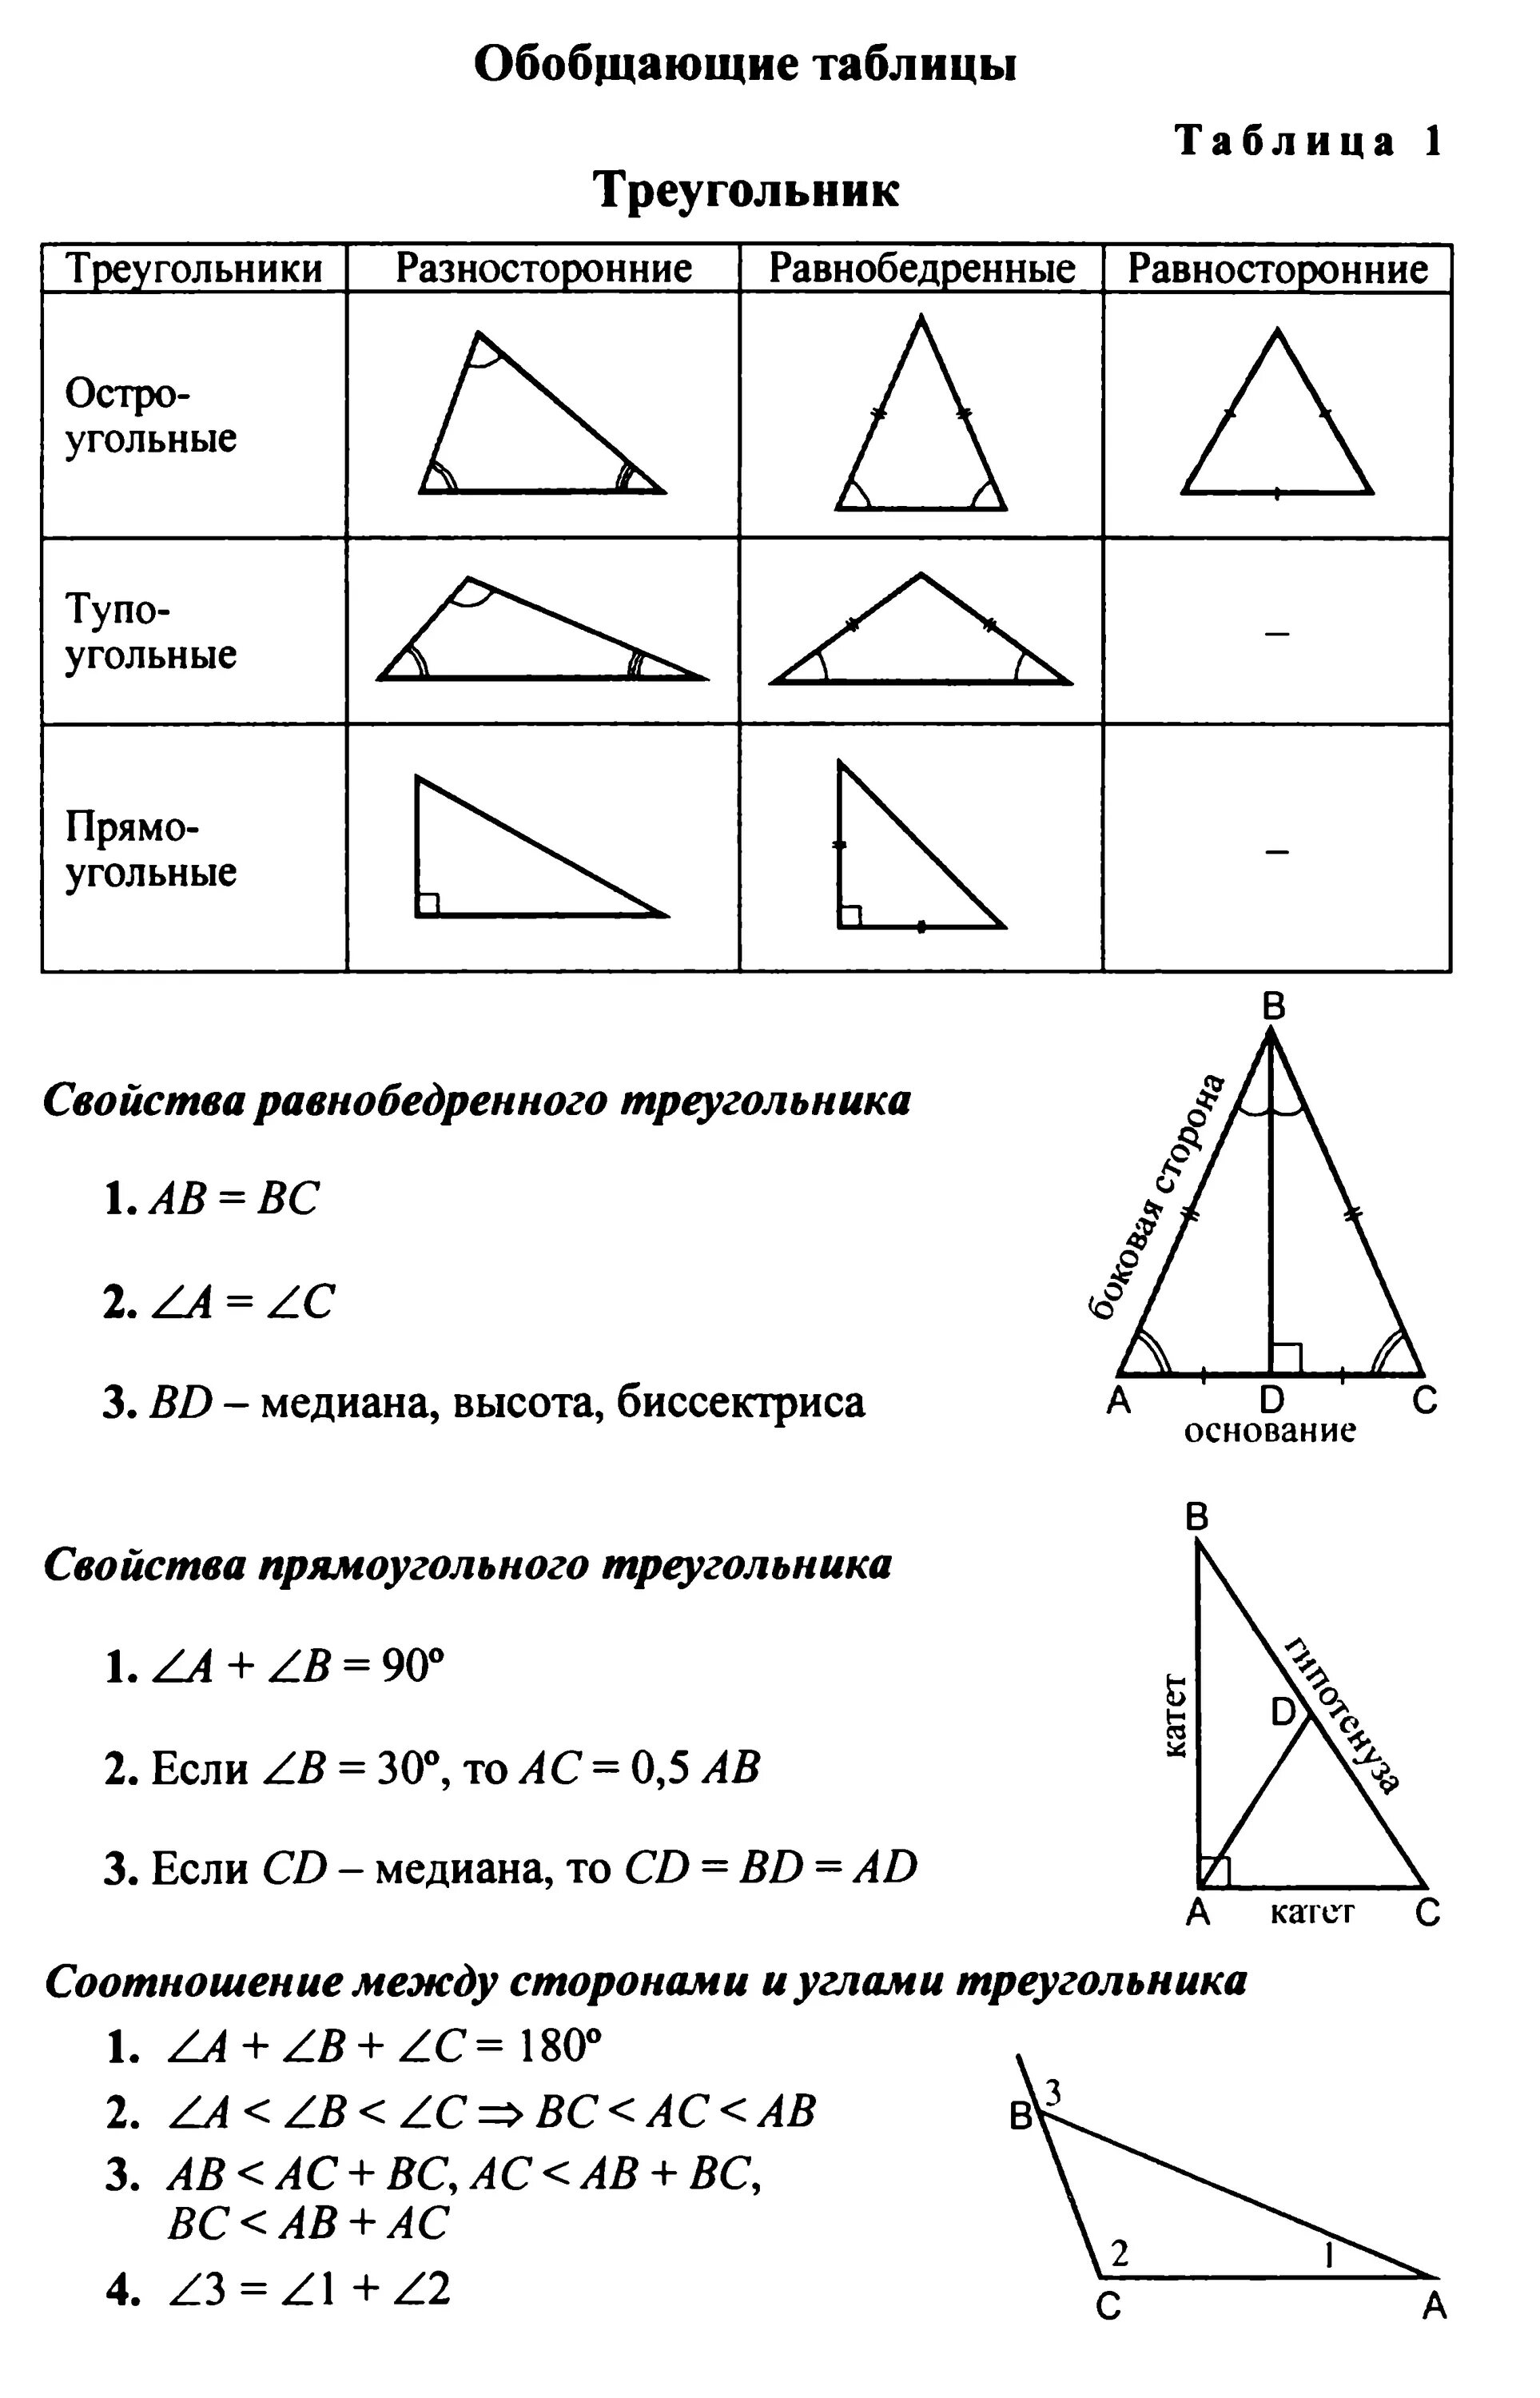 Конспект урока по геометрии 8 класс. Геометрия 7 класс вся теория. Геометрия 7 класс основная теория. Шпаргалка по треугольникам 7 класс формулы. Таблицы по геометрии 7-9 класс Атанасян.